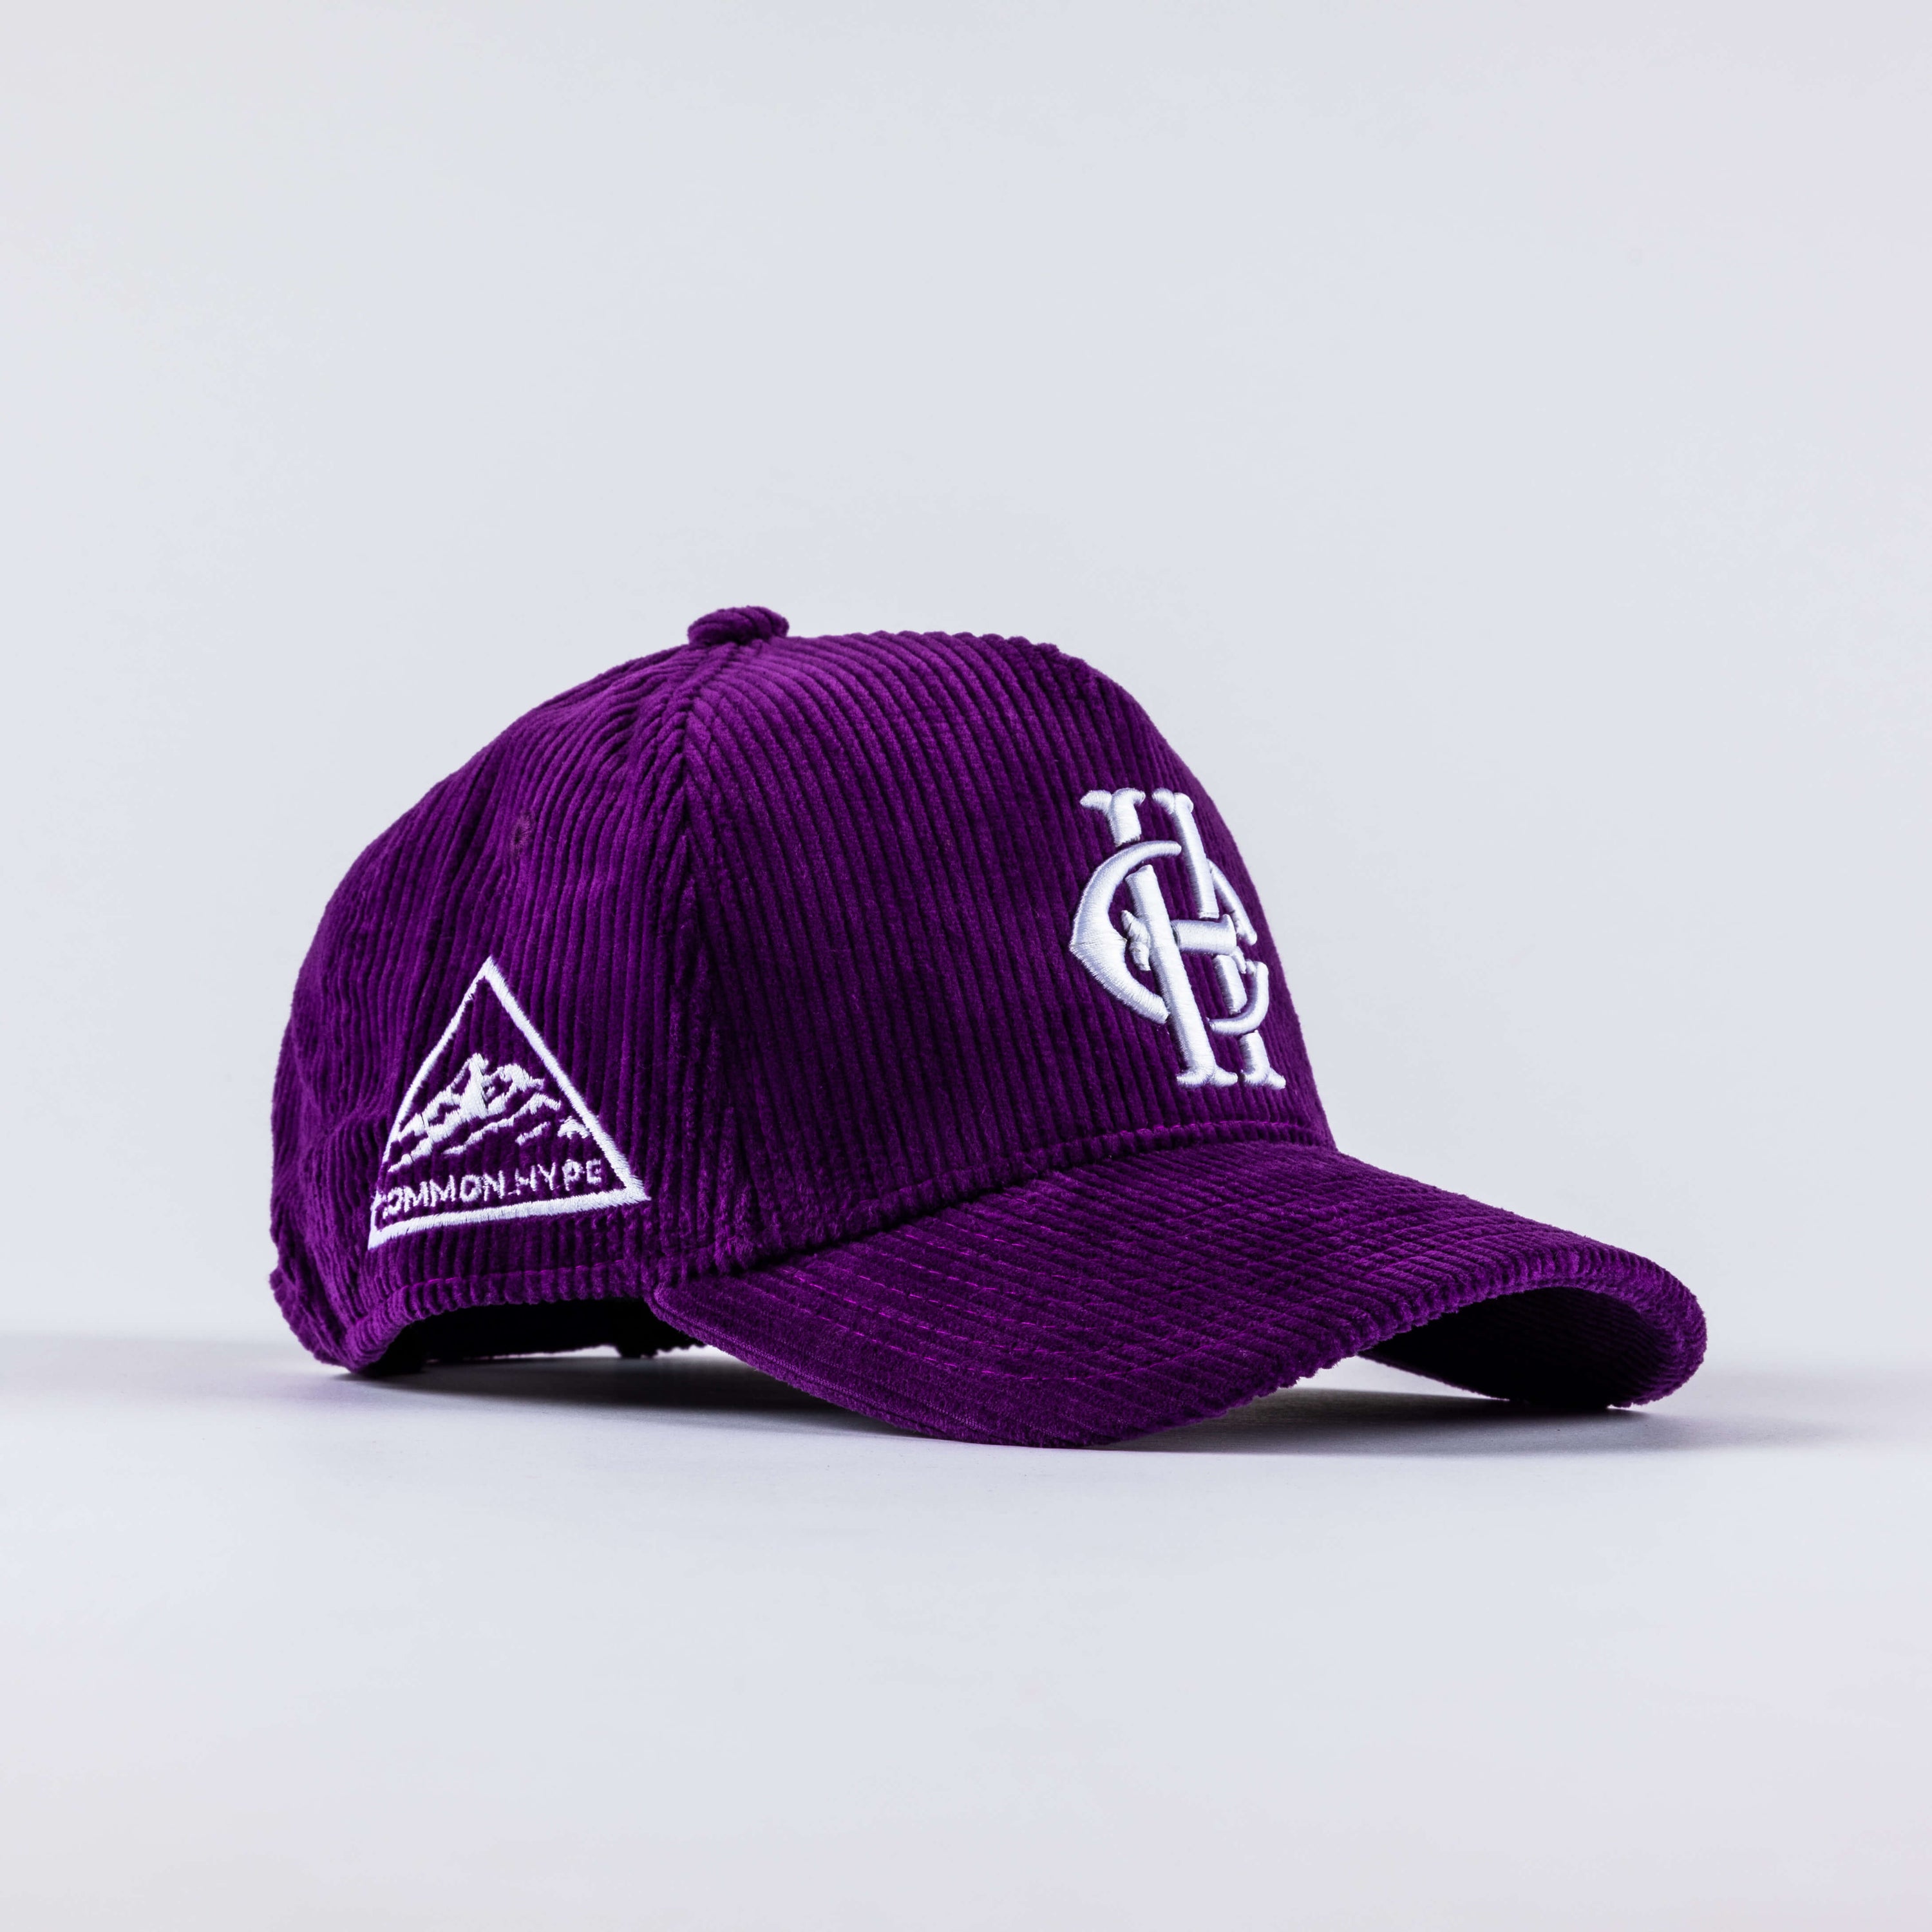 Common Hype Corduroy Violet Hat